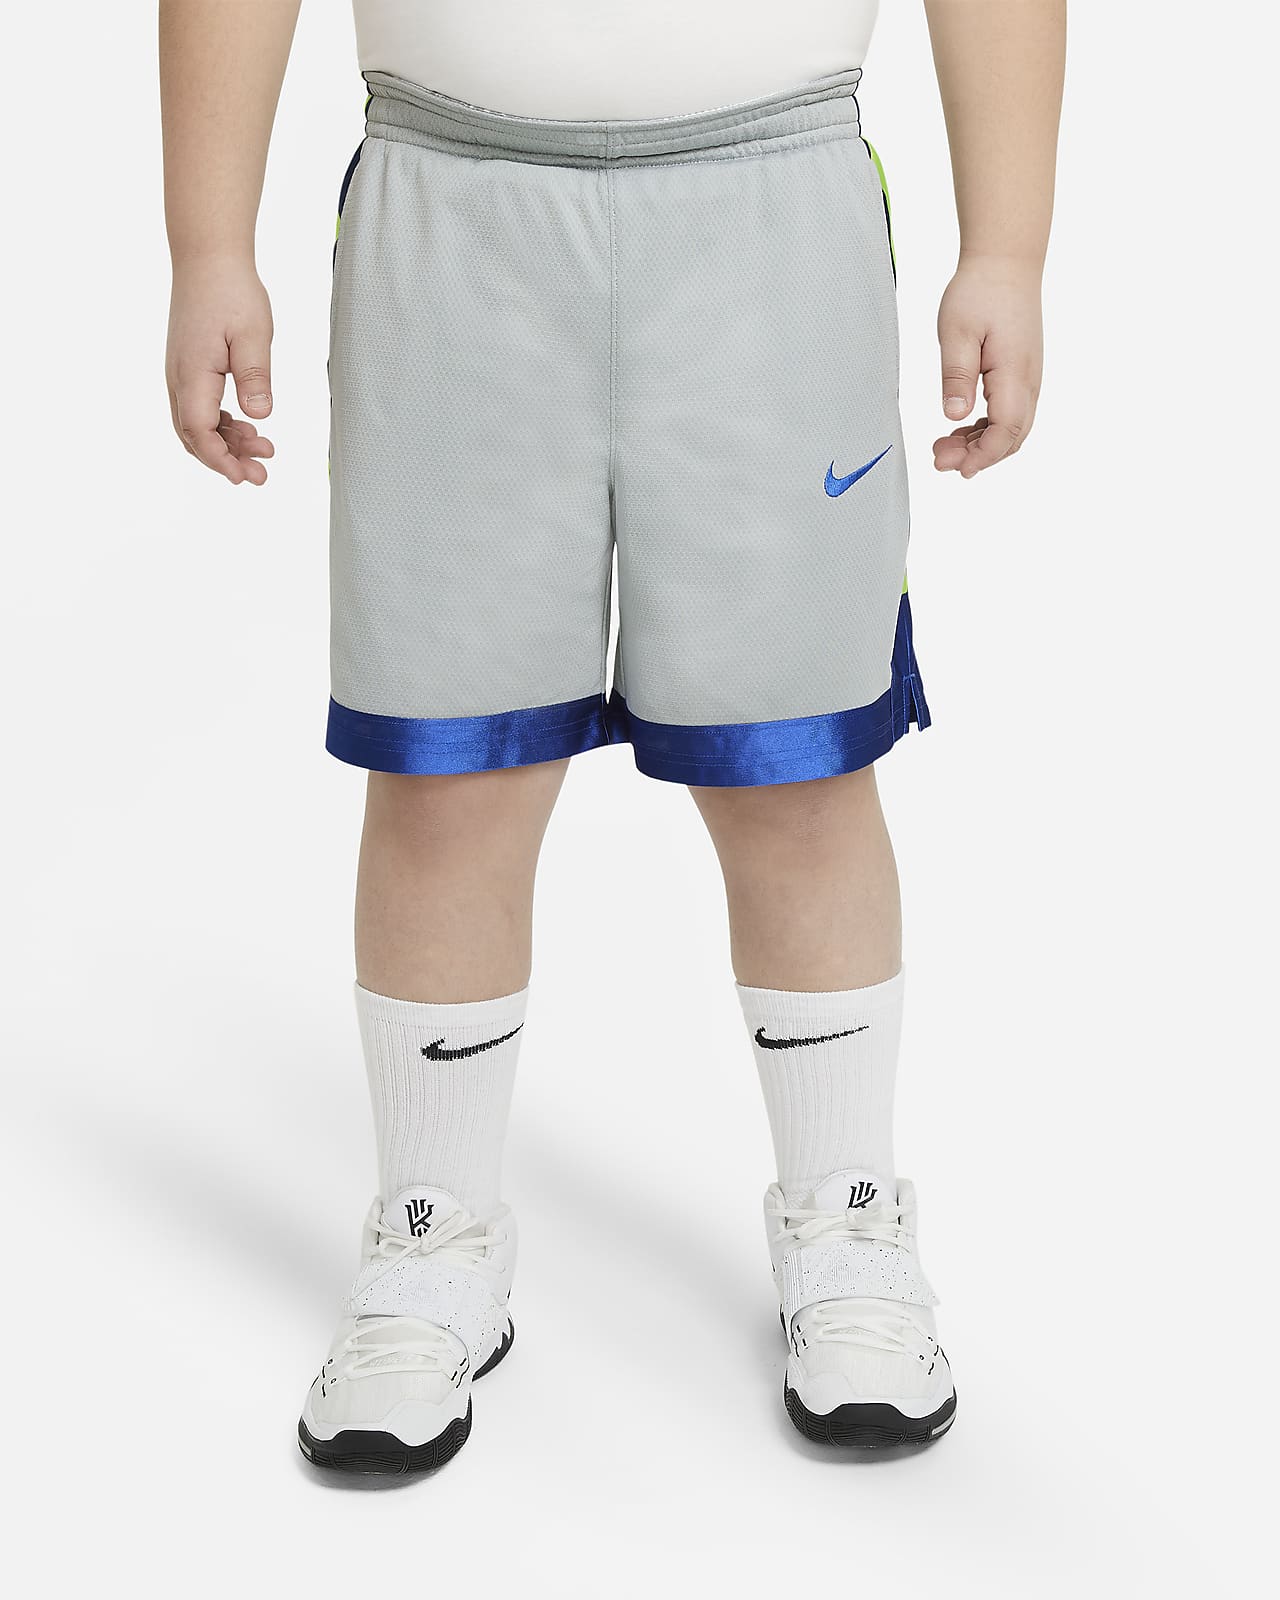 Buy > nike elite basketball shorts youth > in stock